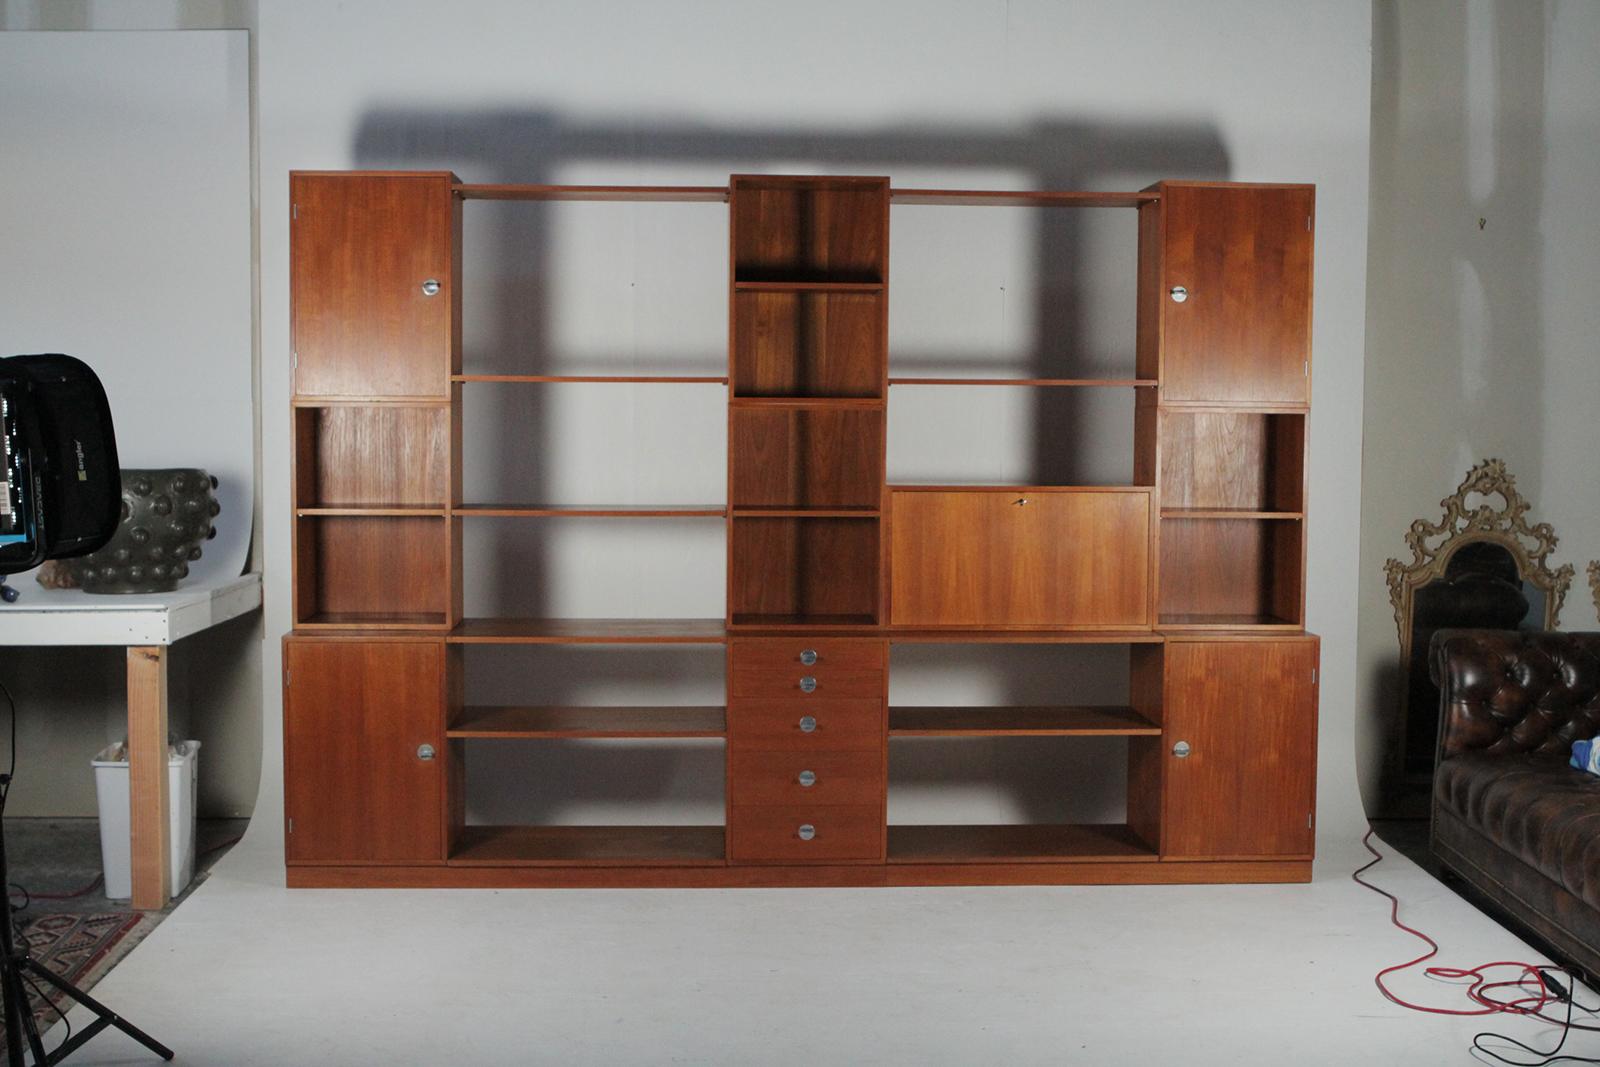 Finn Juhl for France & Son Cresco modular teak wall unit and desk or secretary, circa 1960
Dimensions: 81.5